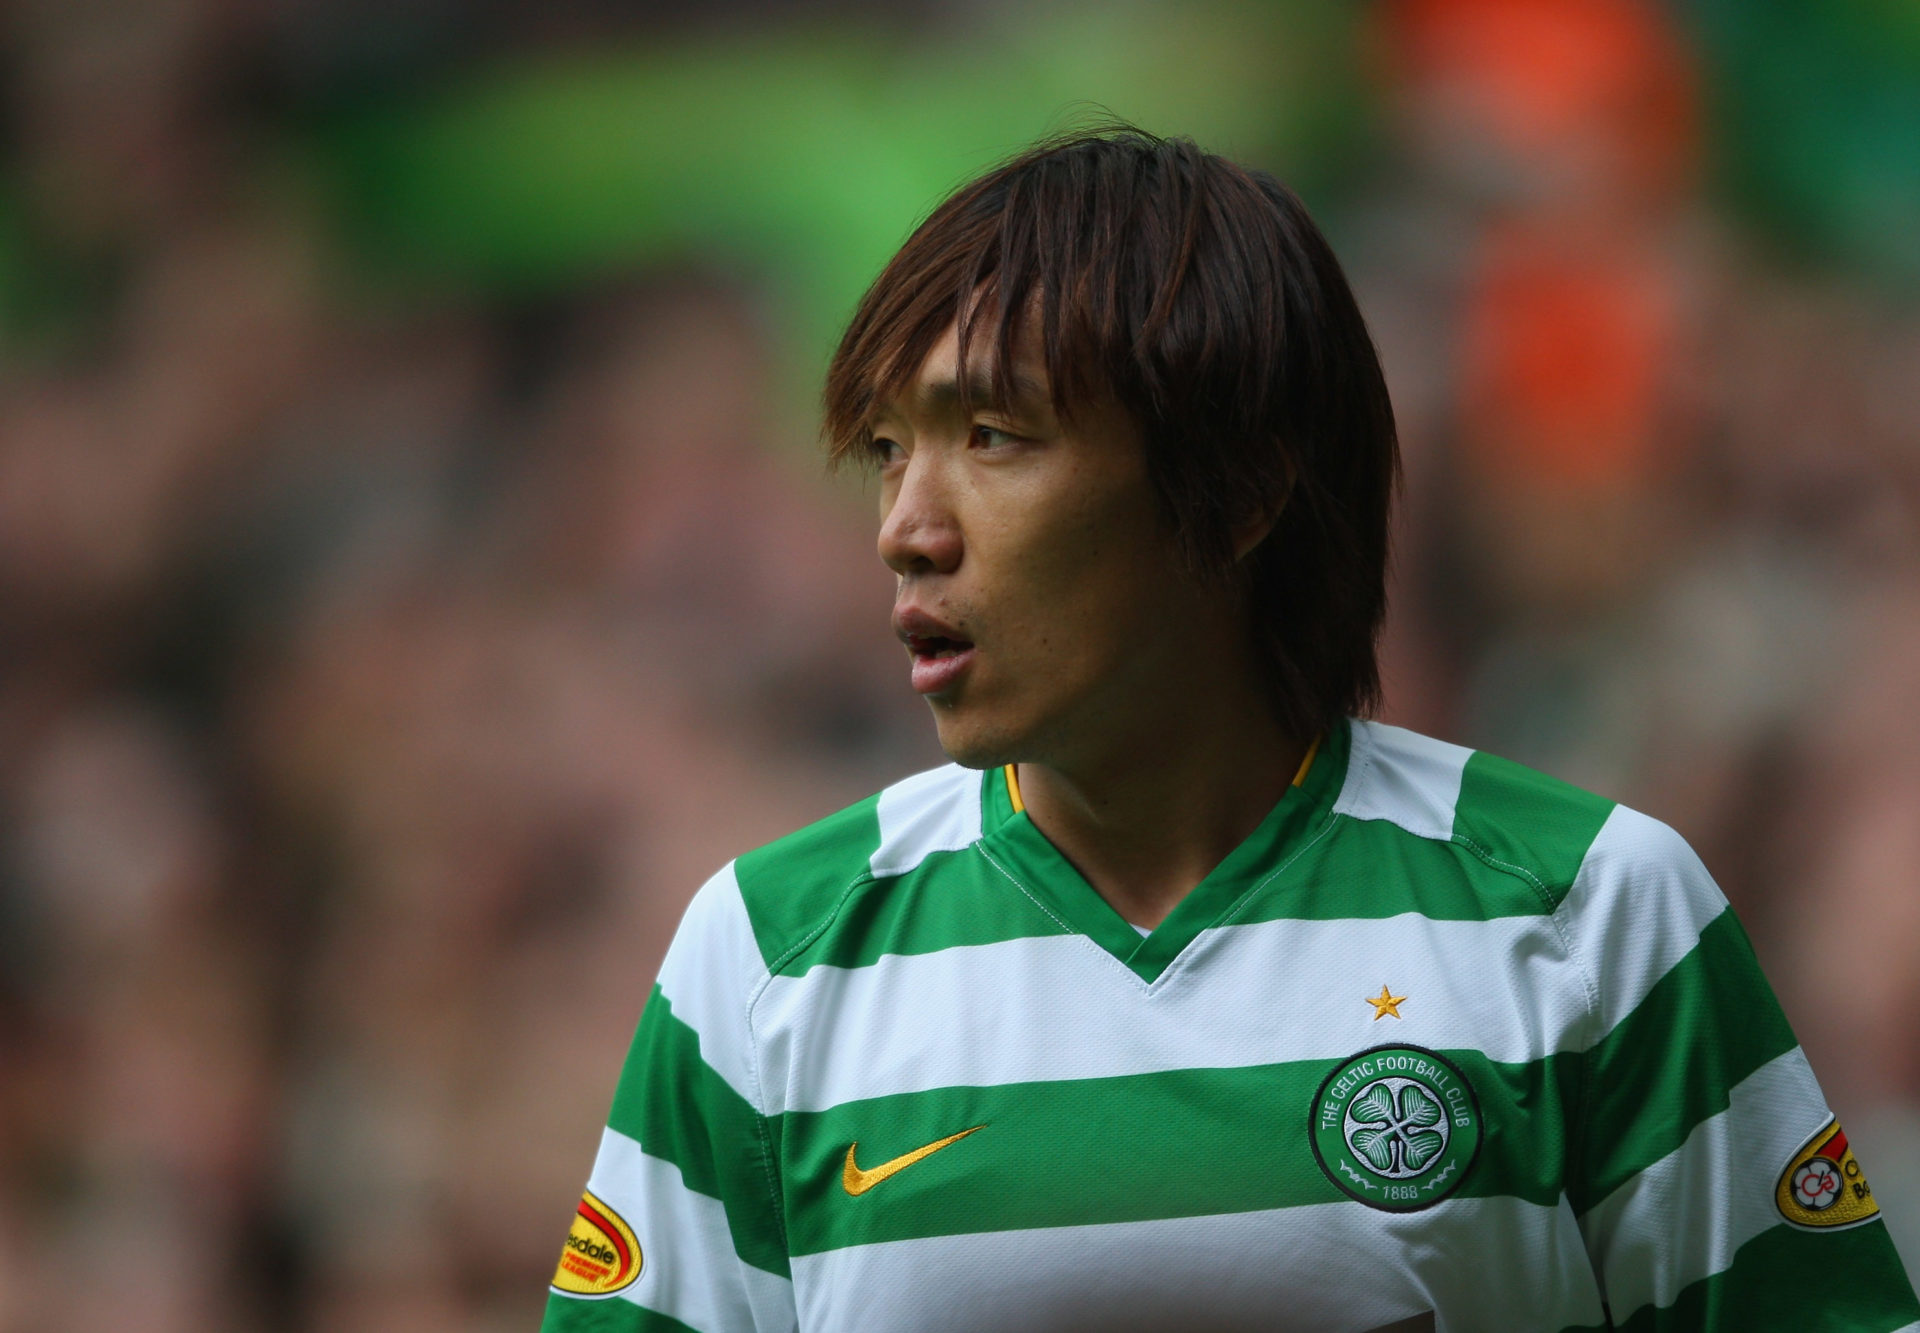 Shunsuke Nakamura lands coaching role after Celtic hero's retirement from  playing - Football Scotland